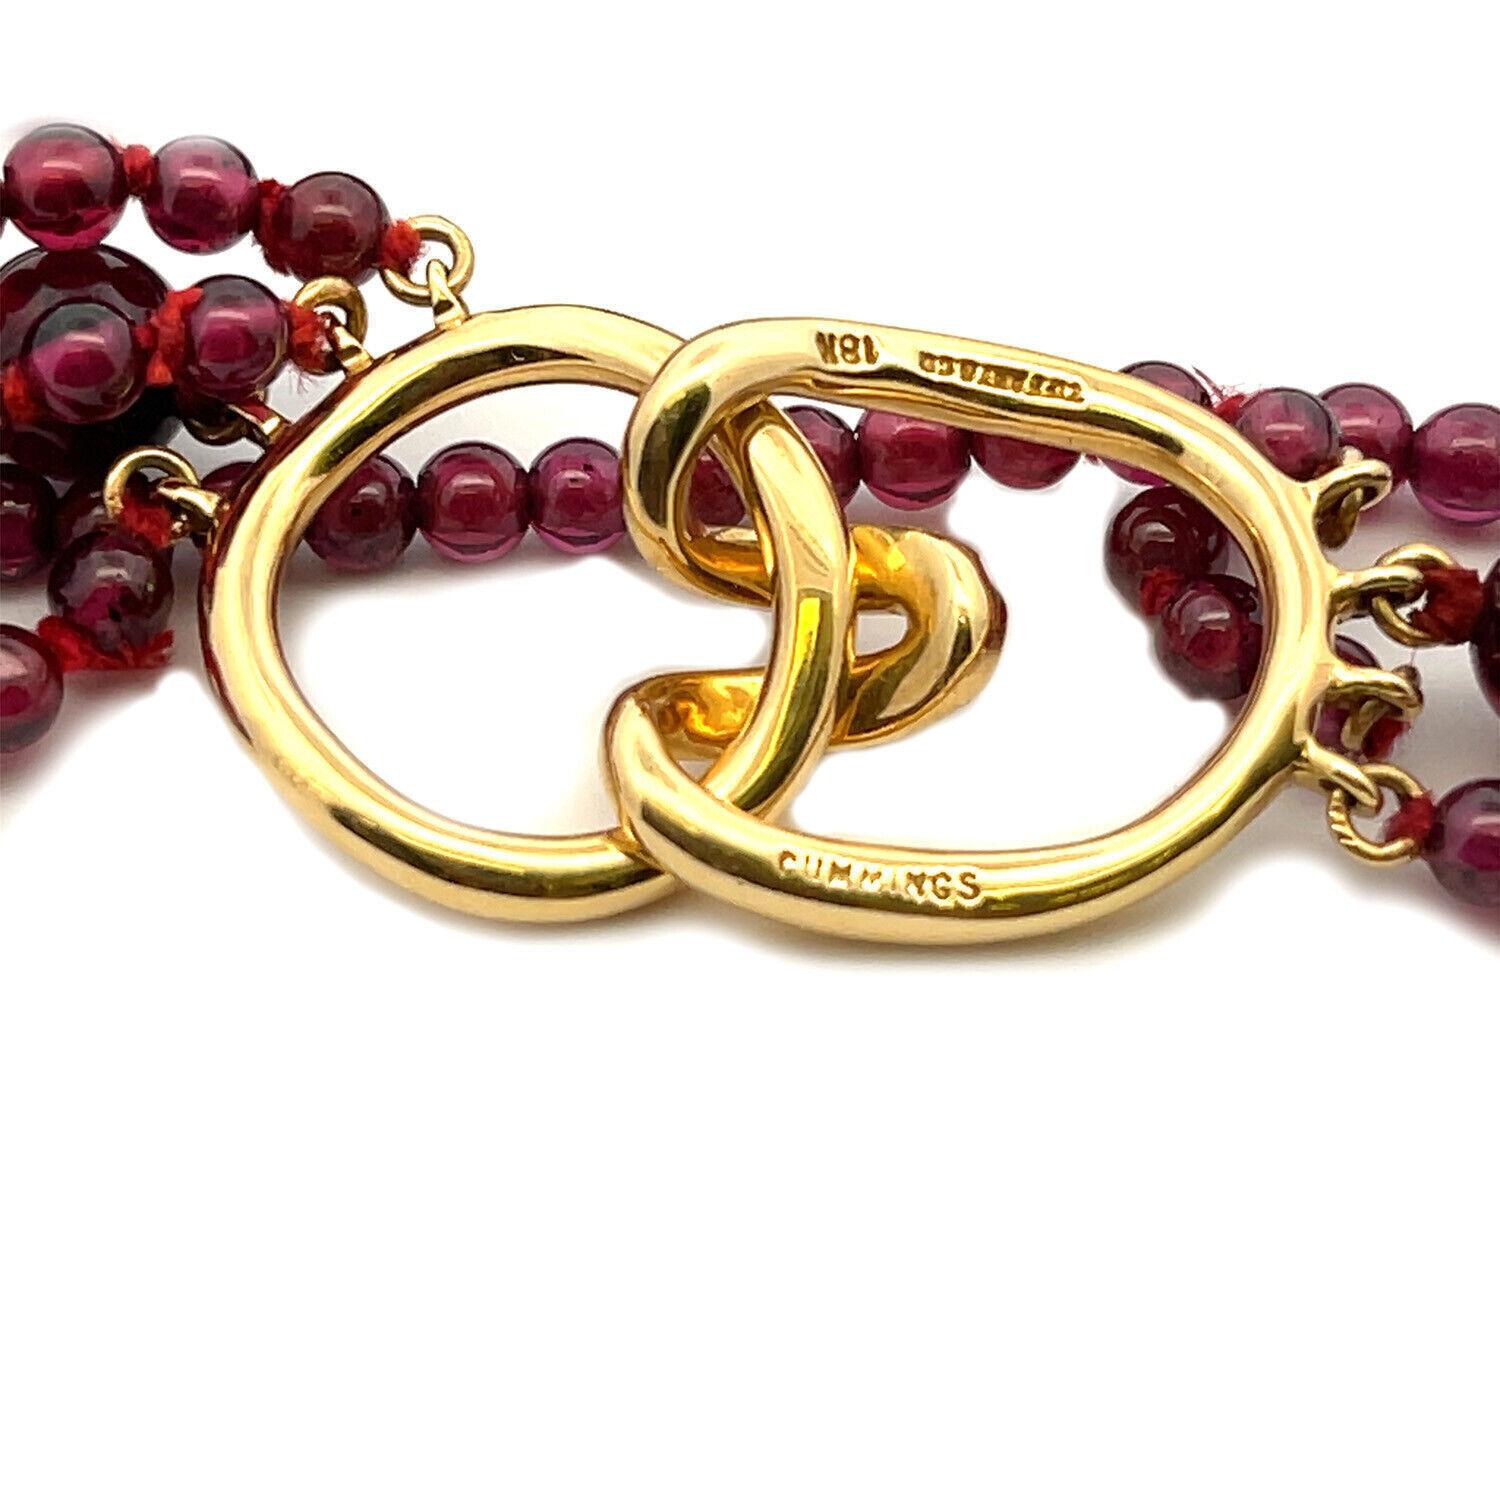 Tiffany & Co. Angela Cummings Lange Halskette mit Granat-Perlen-Motiv 31,5